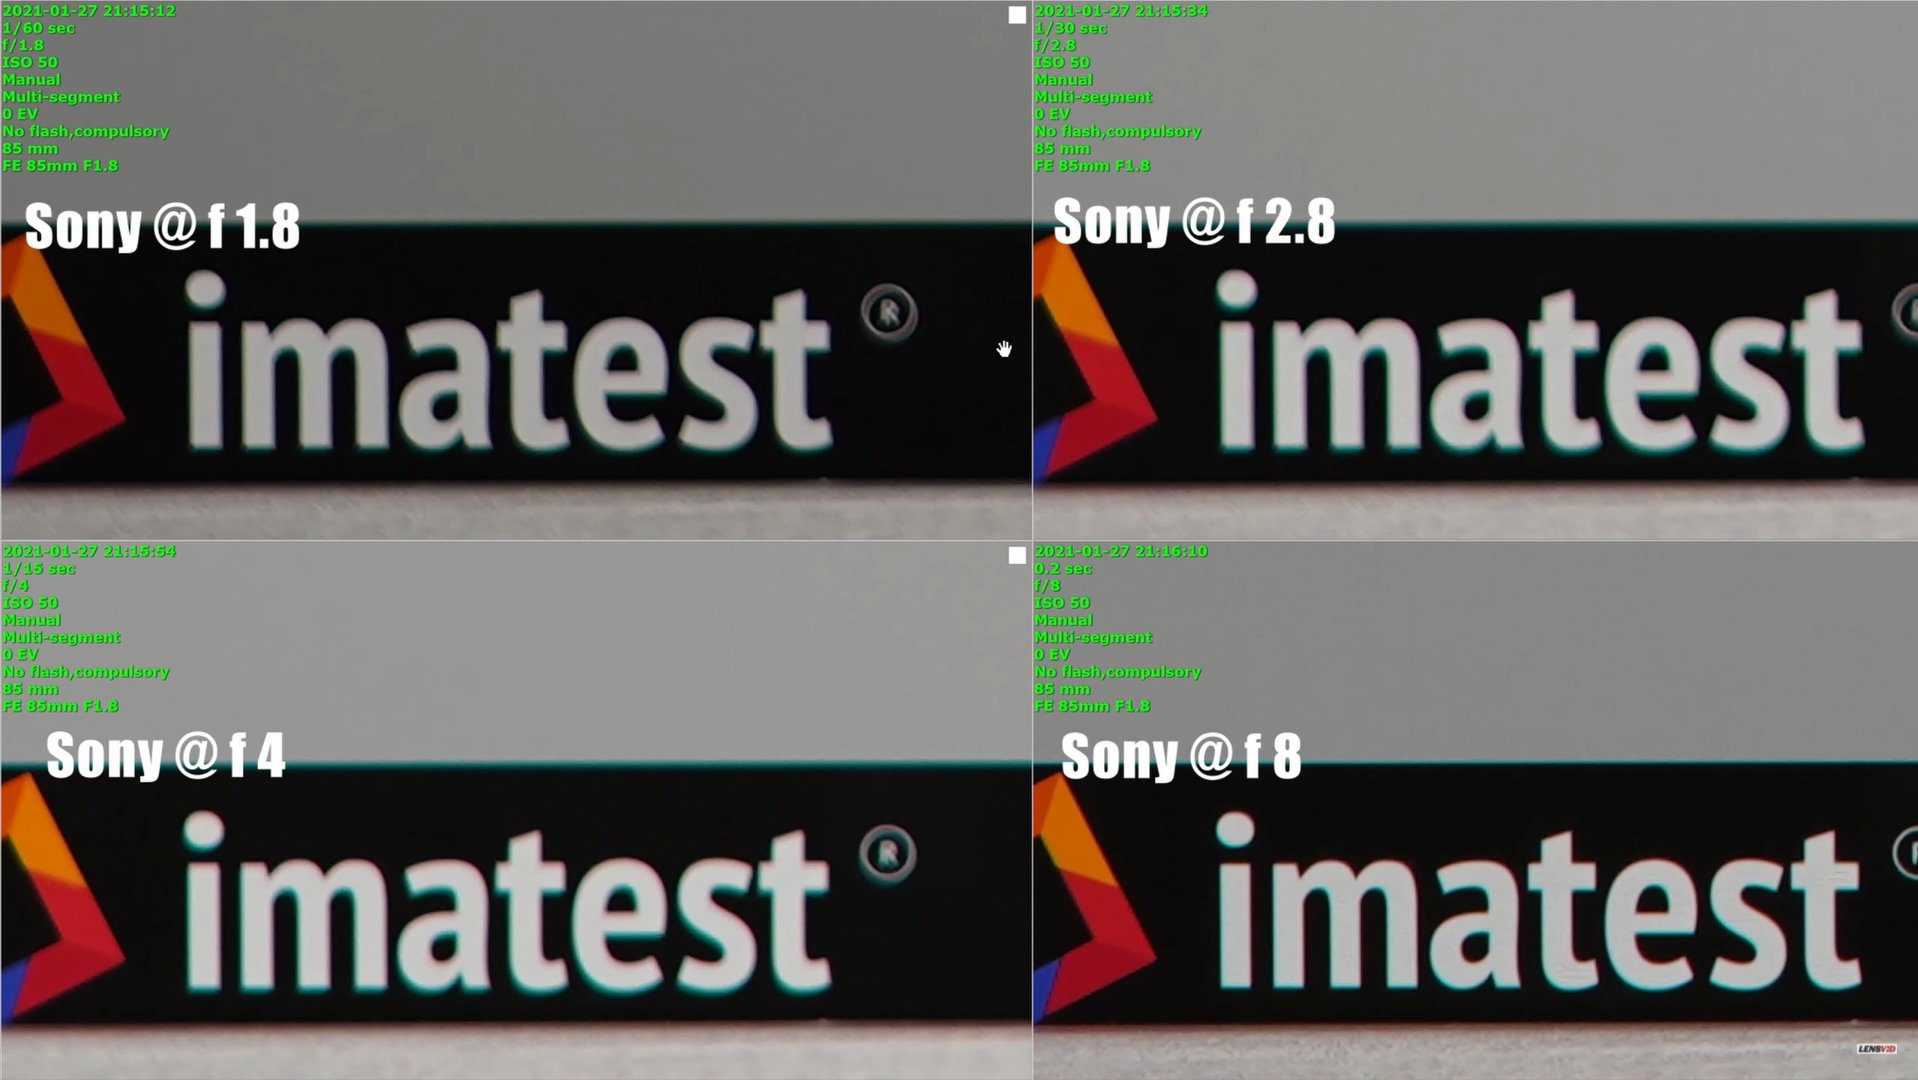 Sigma 85mm f1.4 vs Sony FE85mm f1.8